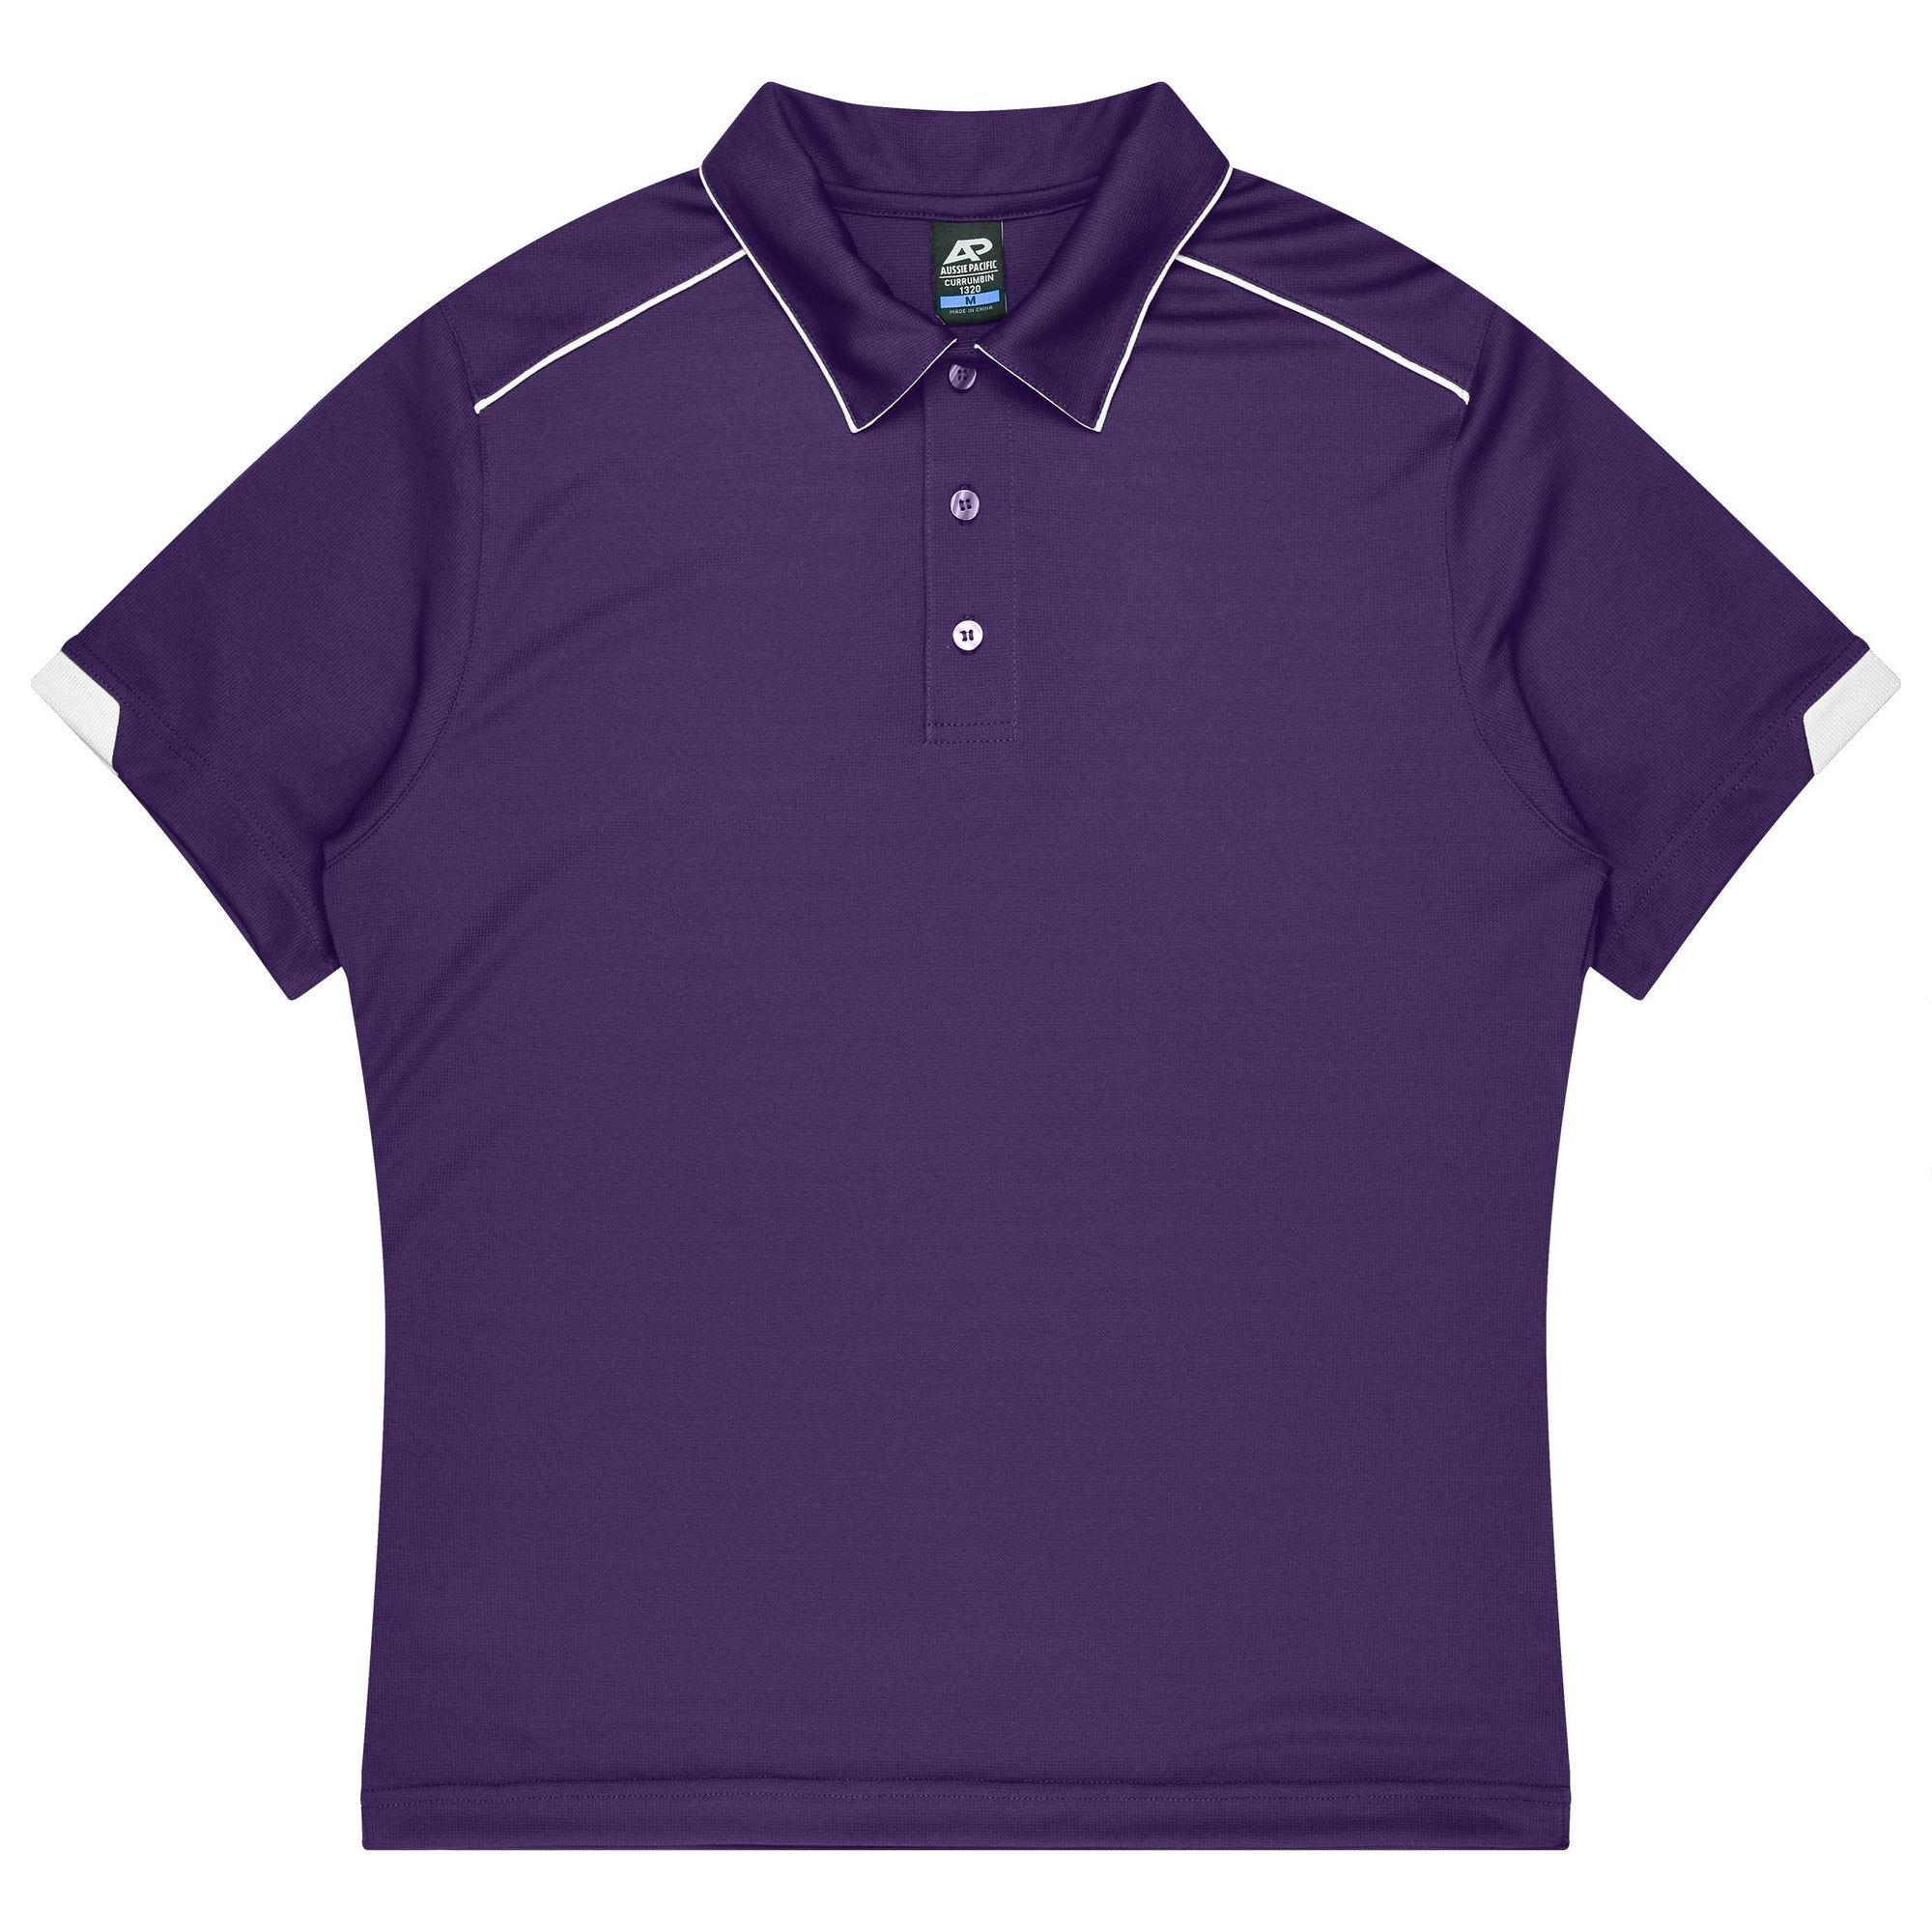 Custom Currumbin Kids Polo Shirts - Purple/White